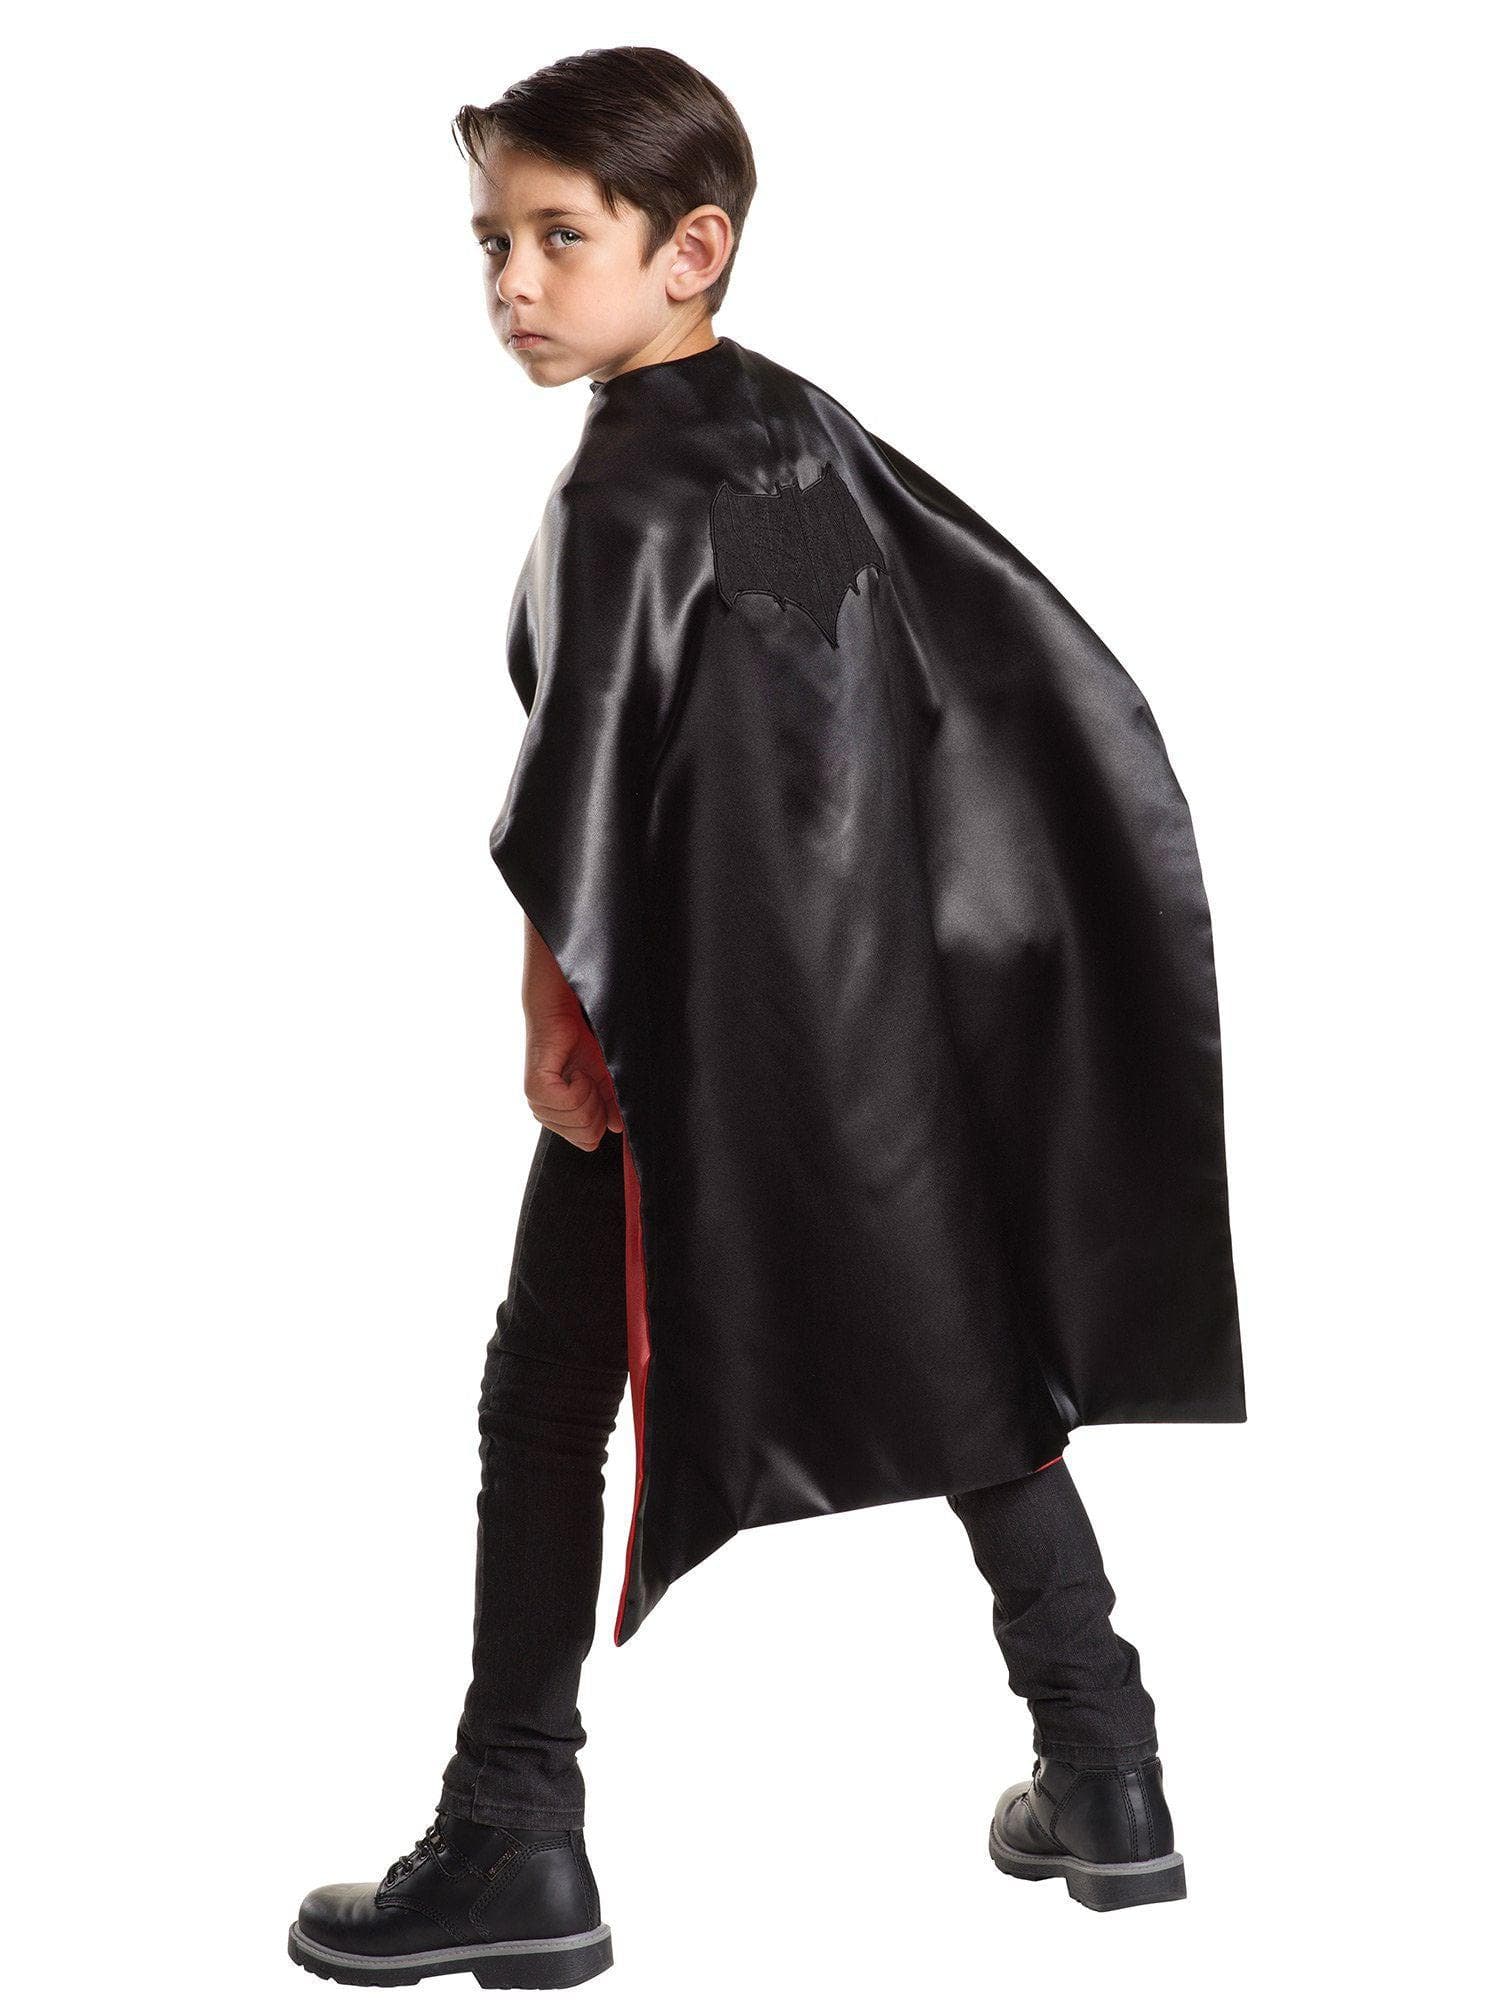 Kid's Justice League Batman Costume - costumes.com